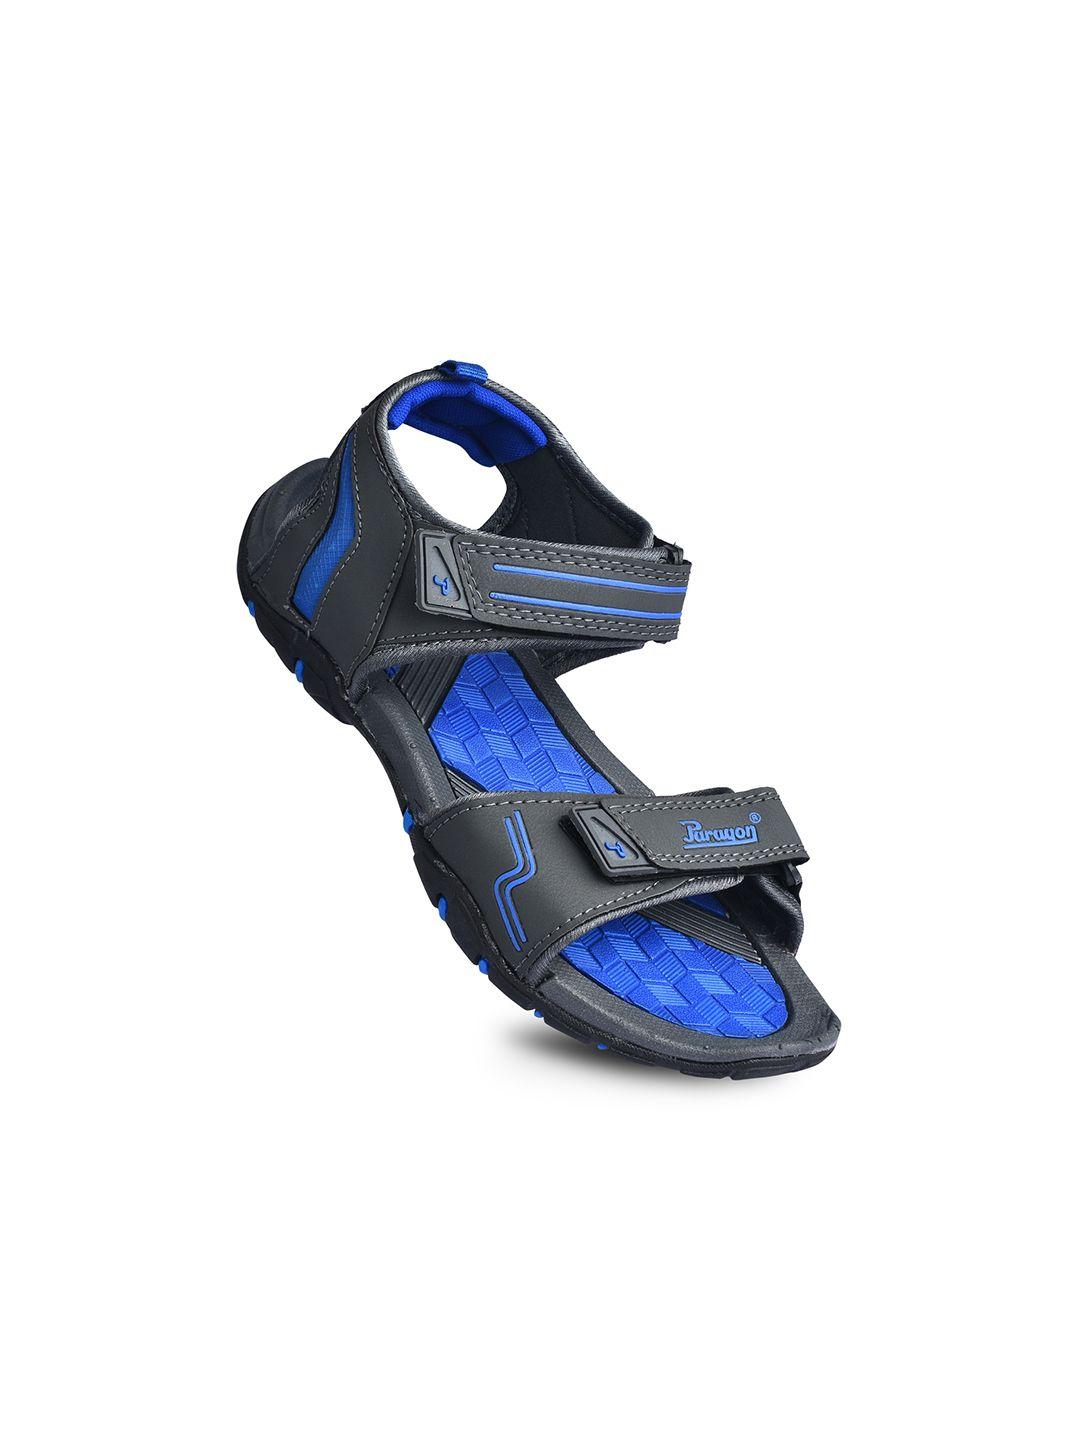 paragon-men-blue-&-grey-sports-sandals